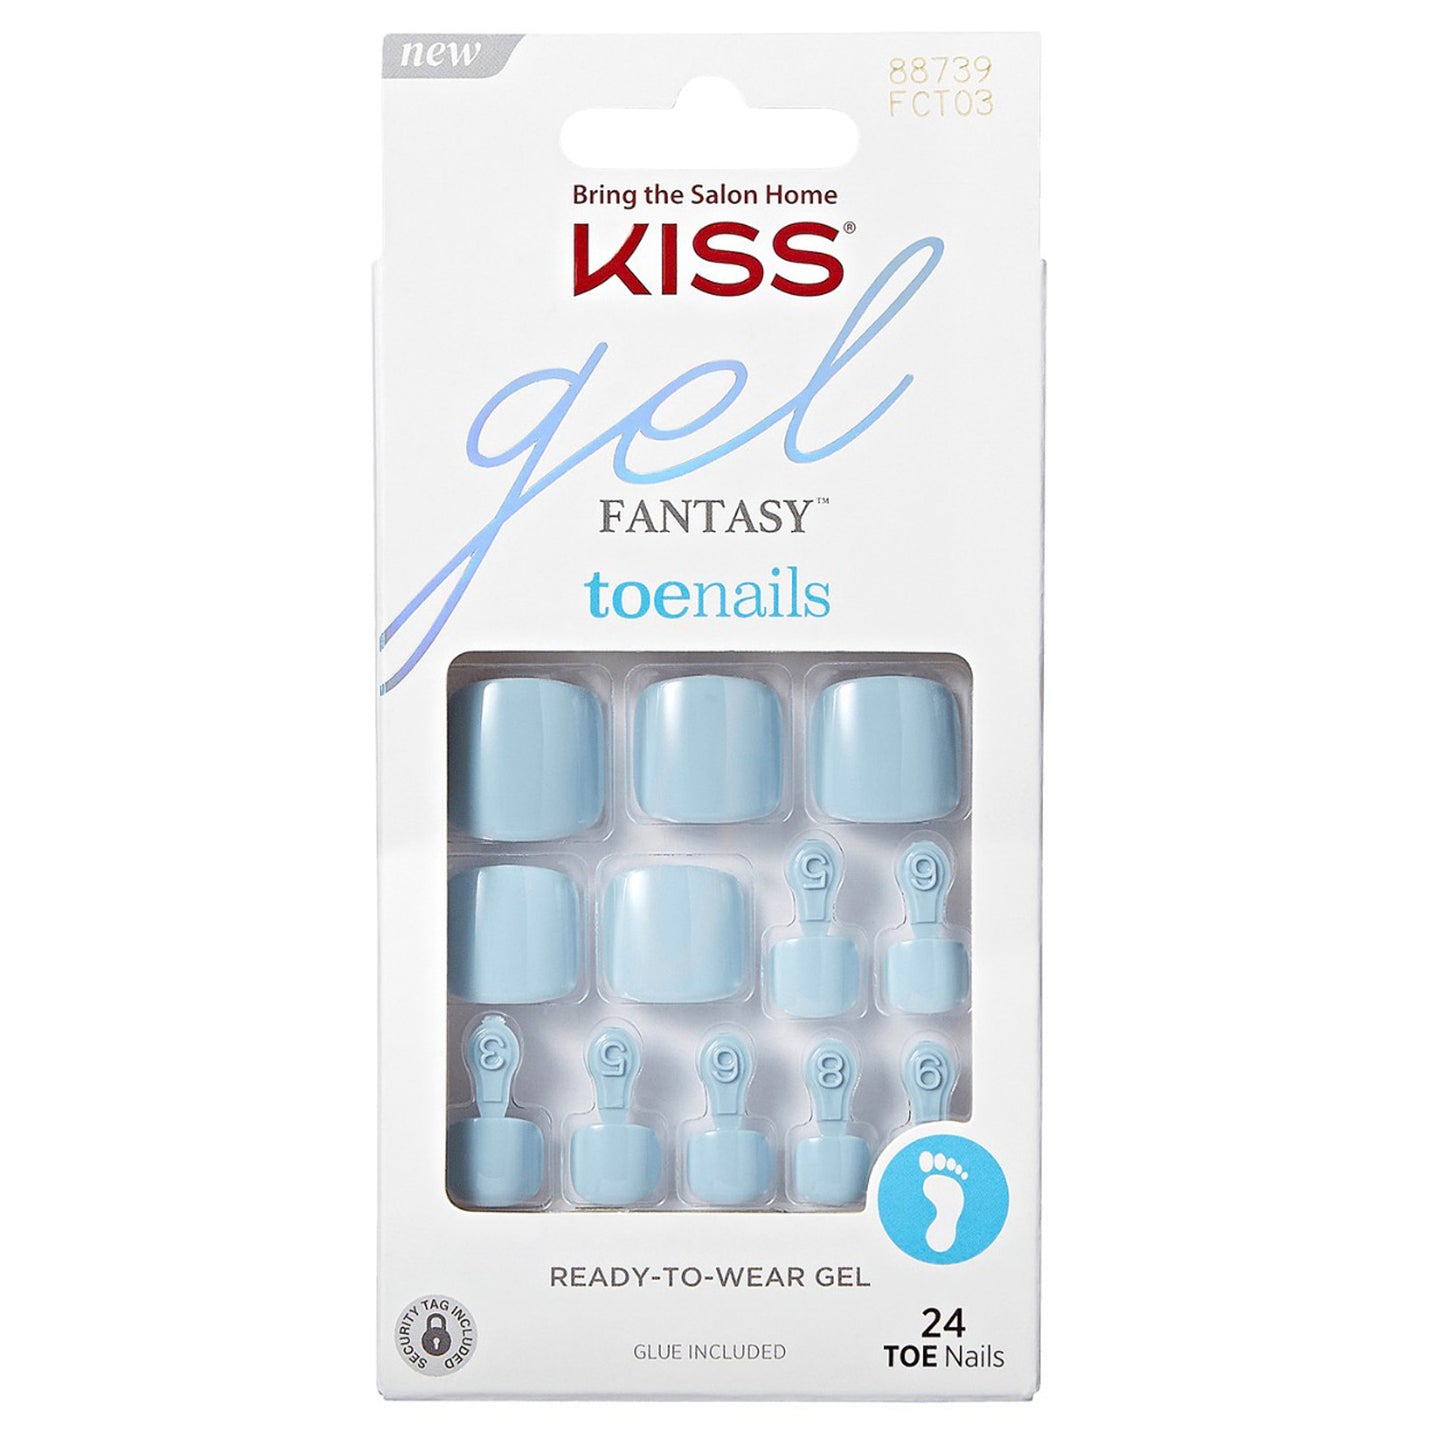 KISS Gel Fantasy Toenails